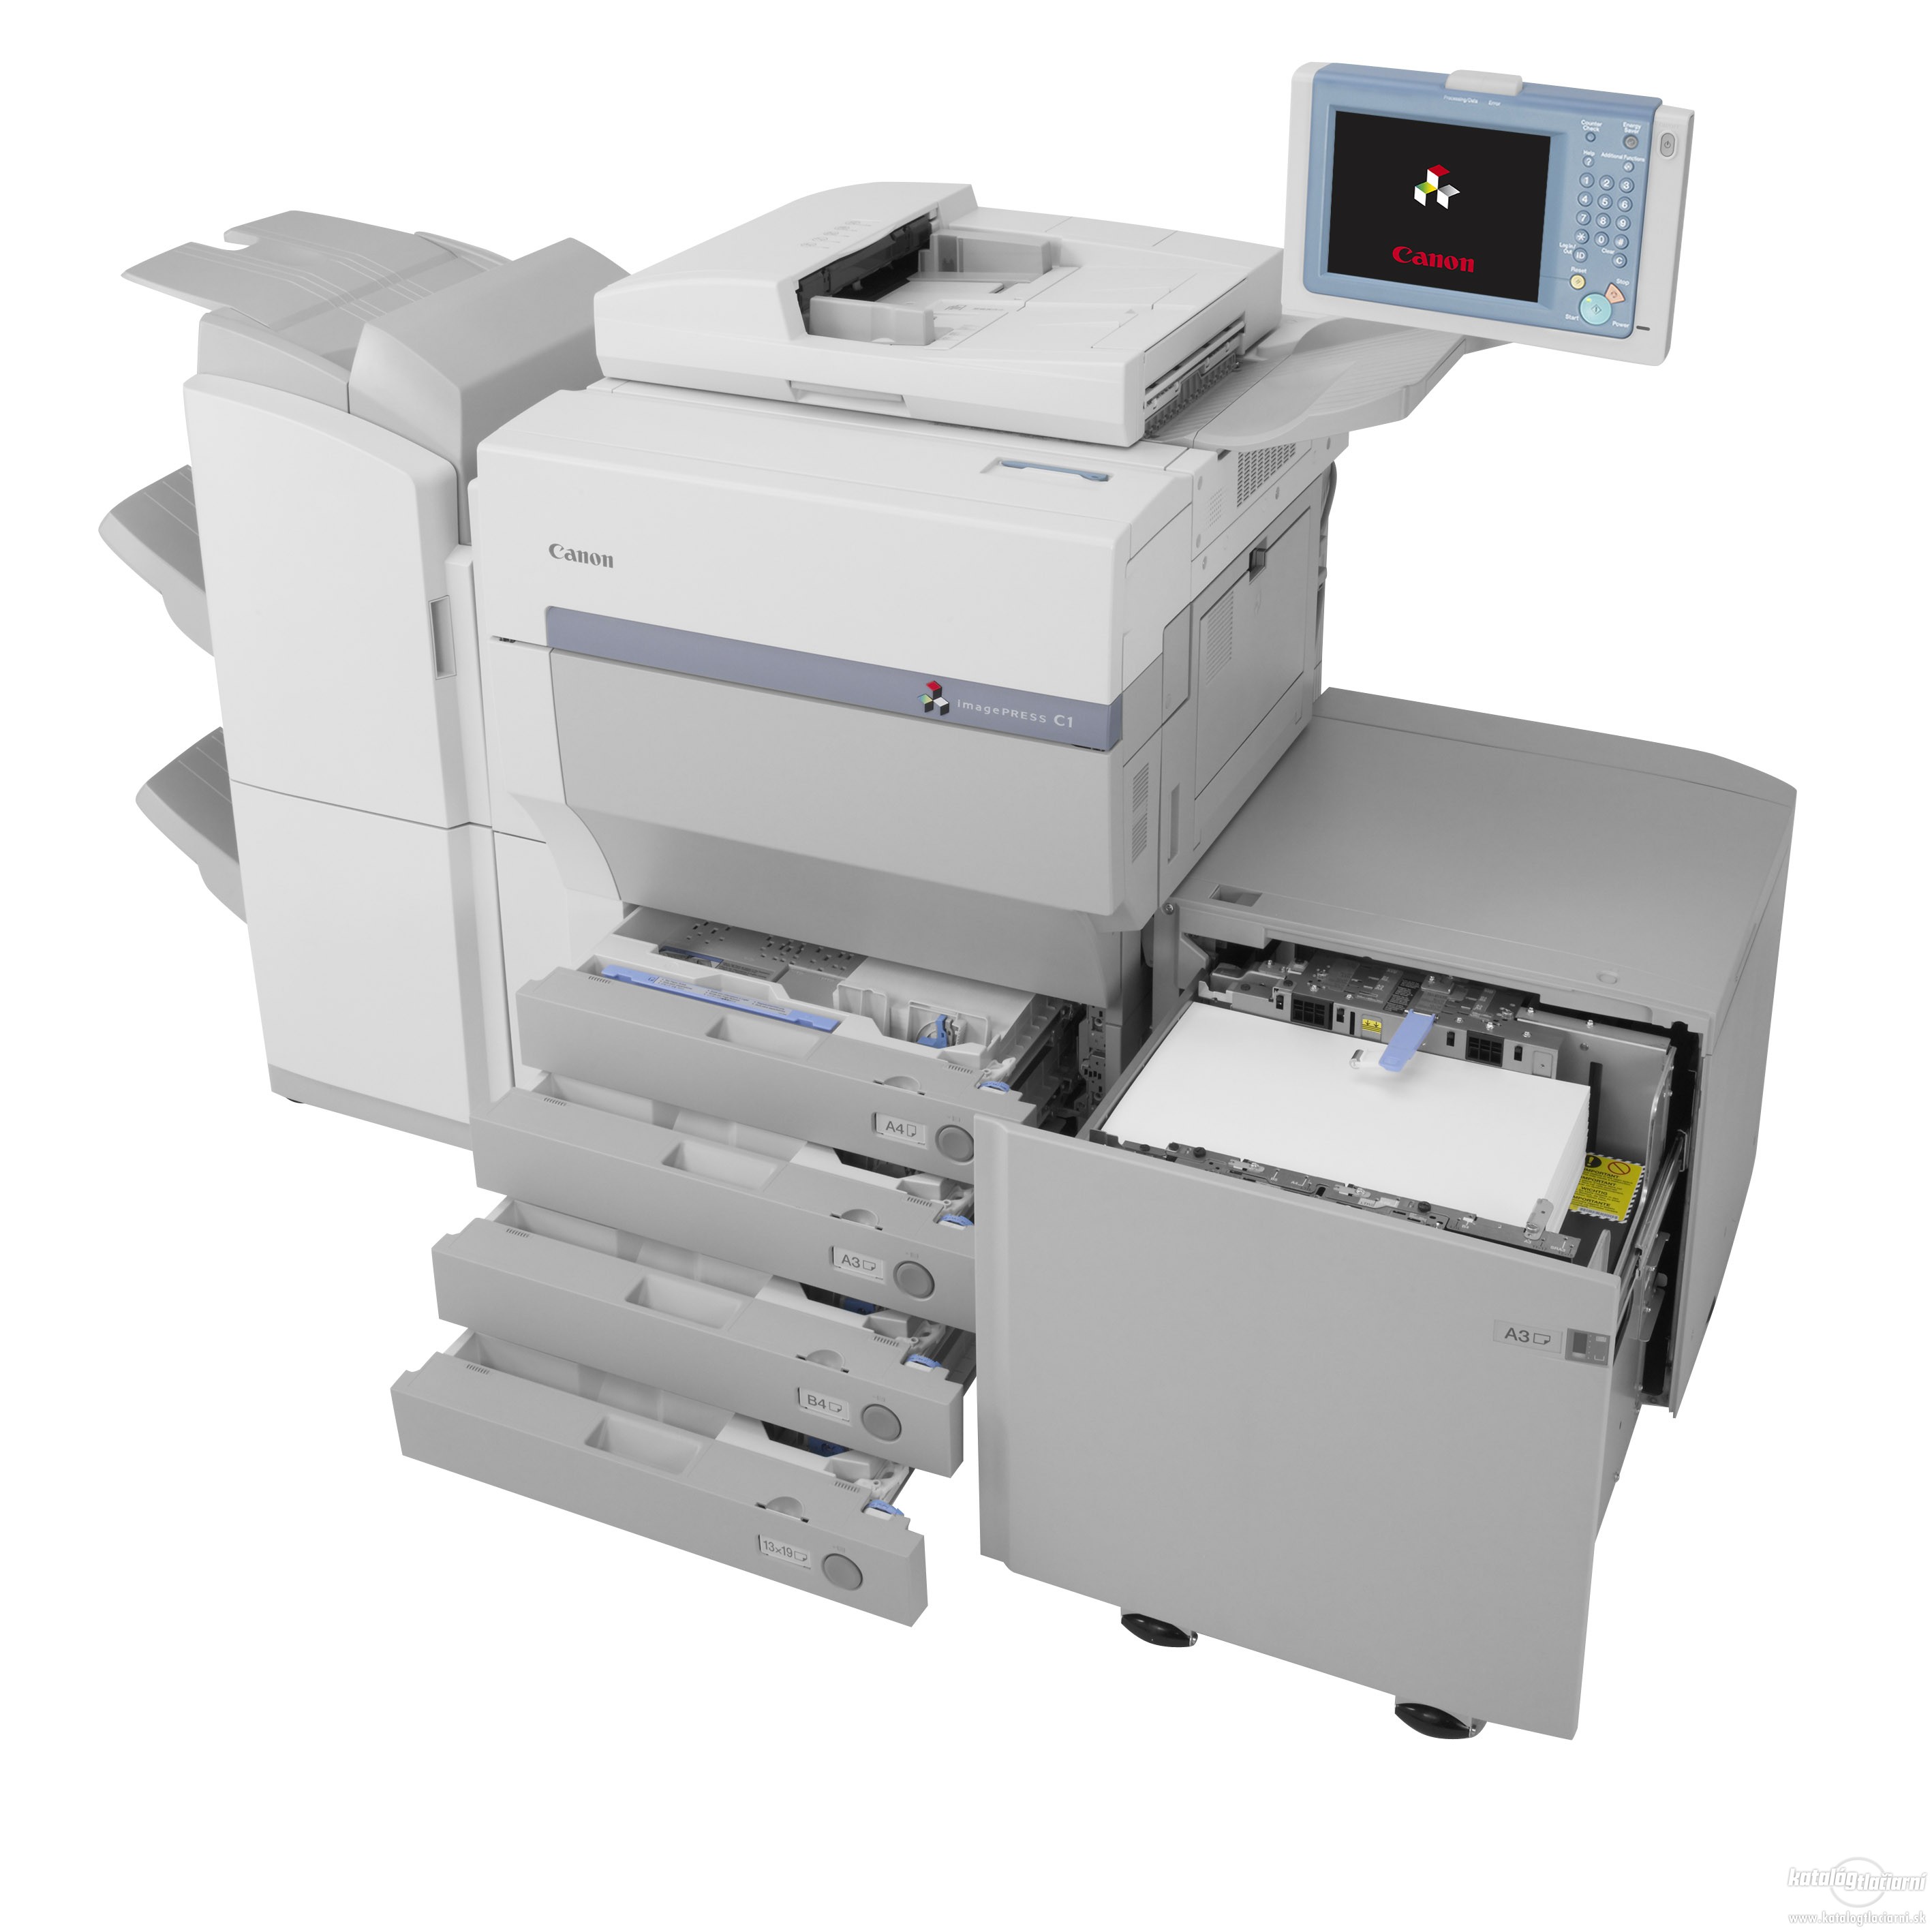 Canon ImagePress C1 Color Digital Copier Printer Proofer Press